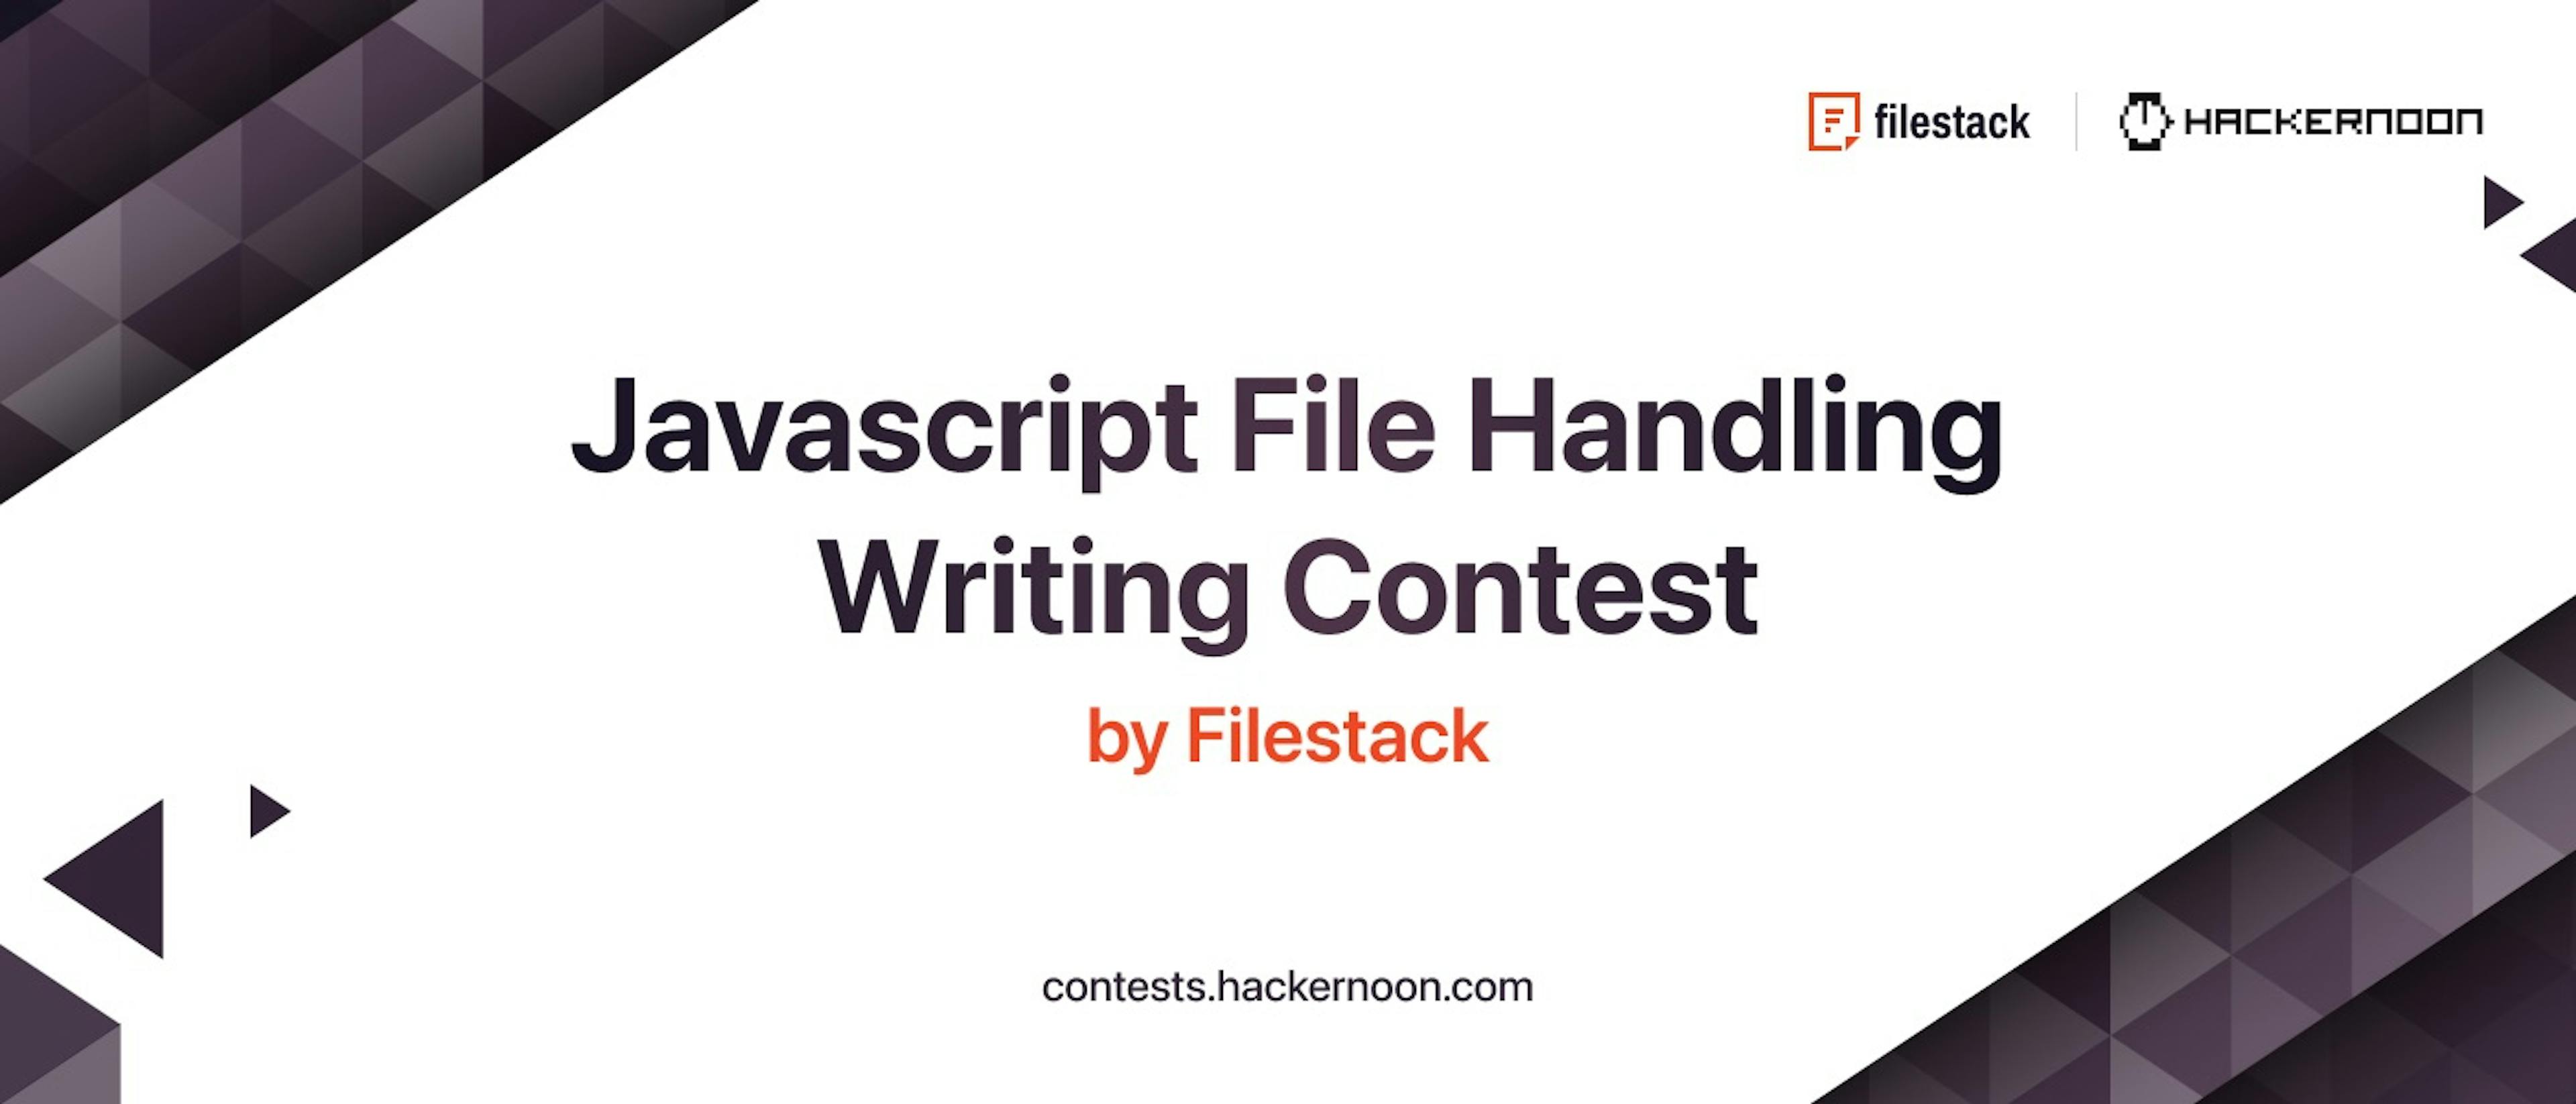 featured image - Filestack 和 HackerNoon 举办的 Javascript 文件处理写作比赛